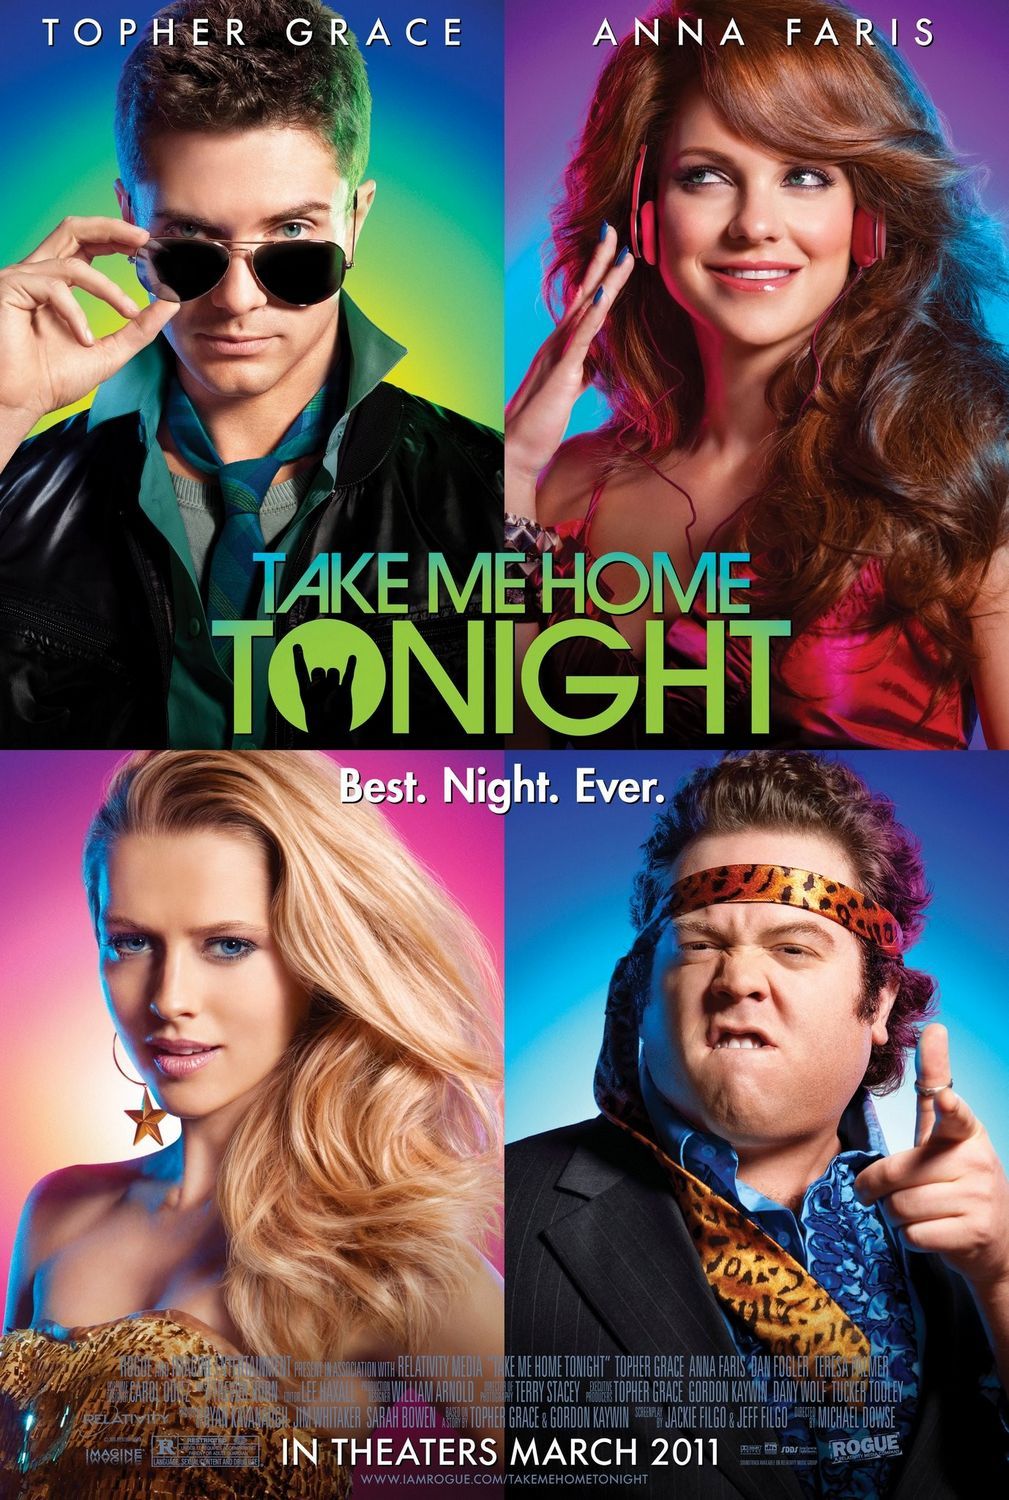 Take Me Home Tonight (2011) ขอคืนเดียว คว้าใจเธอ Topher Grace